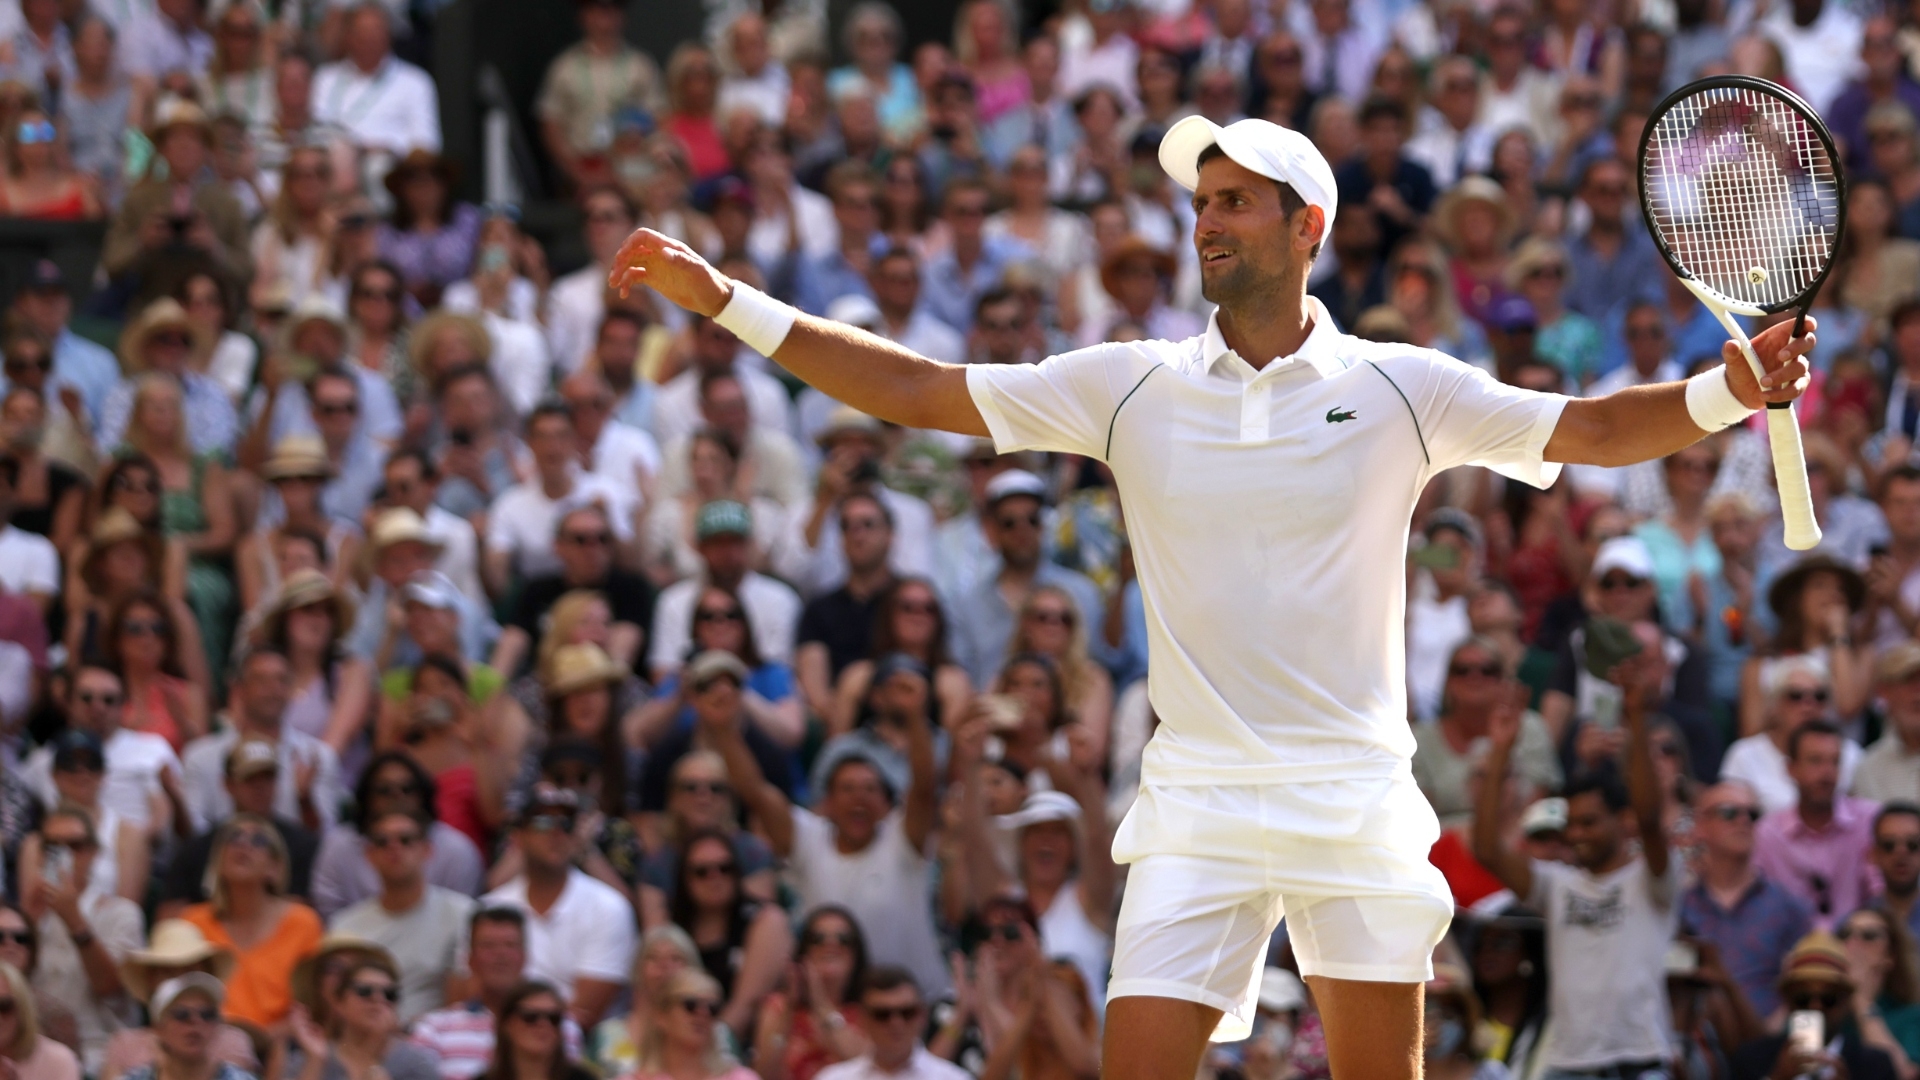 Djokovic beats Kyrgios to win 4th consecutive Wimbledon title - Stream the Video